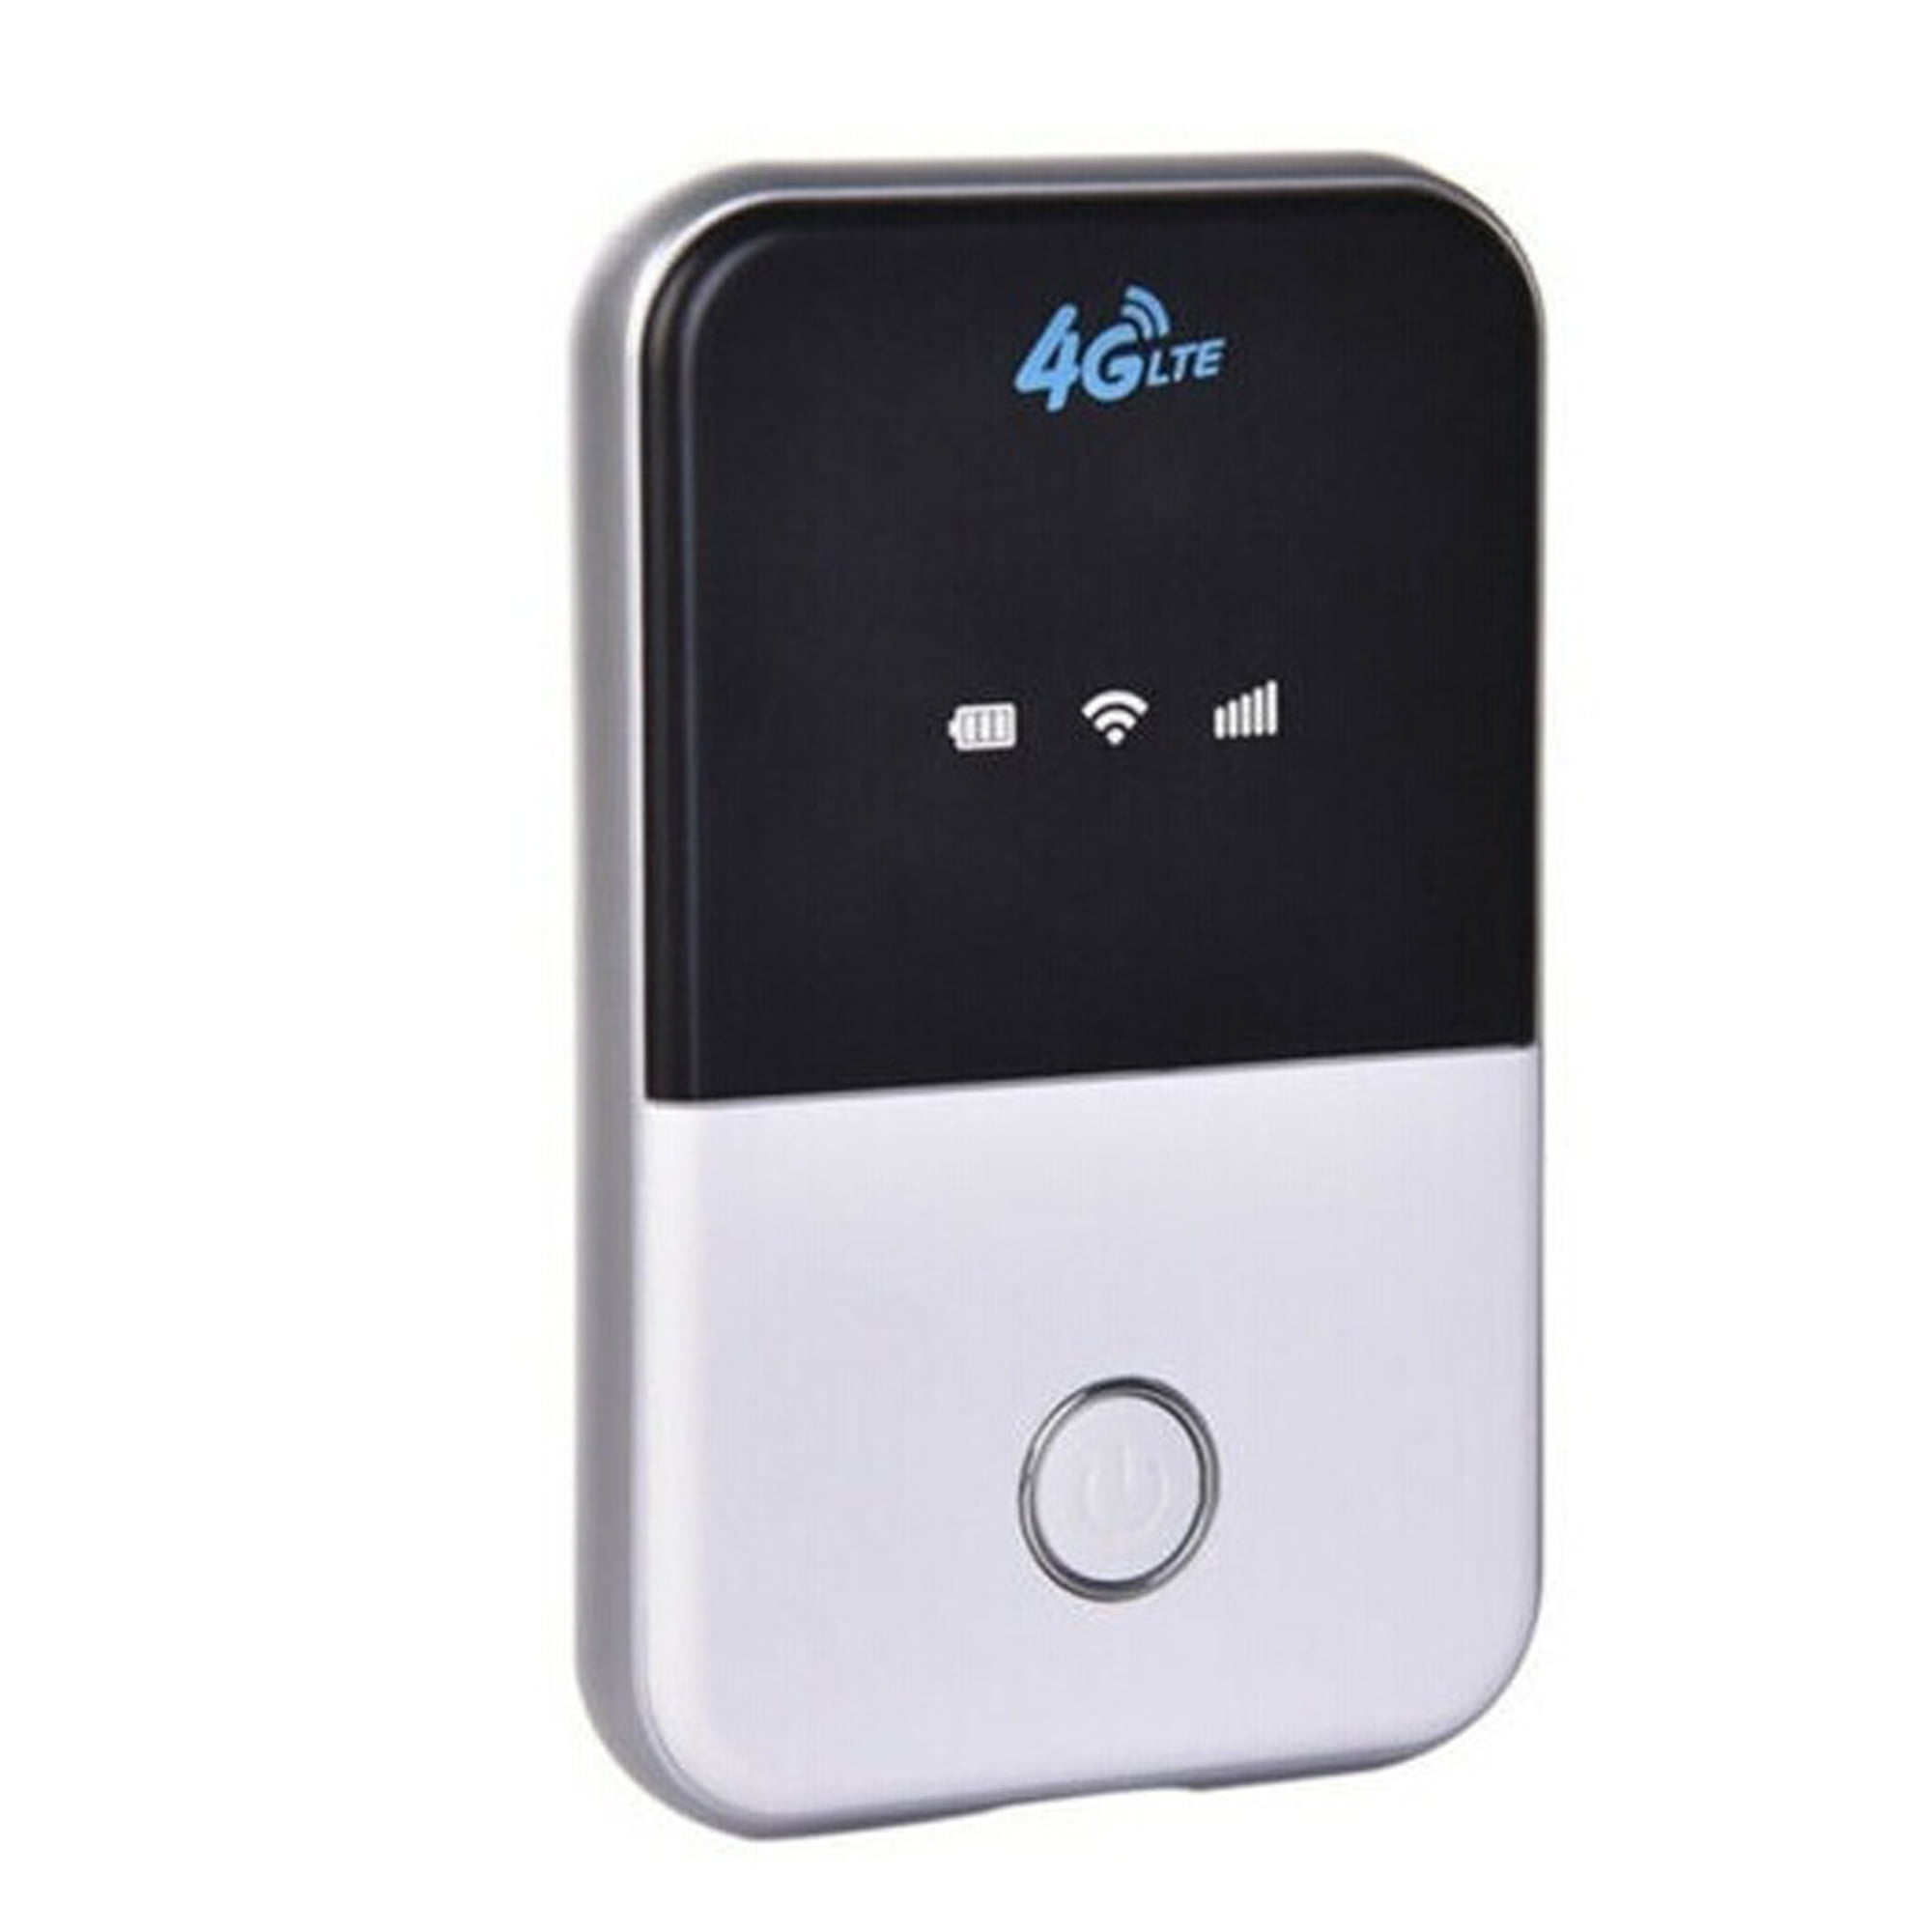 Mifi Portable WIFI Pocket Broadband Hotspot Wireless Router Mobile Unlock 4G LTE 